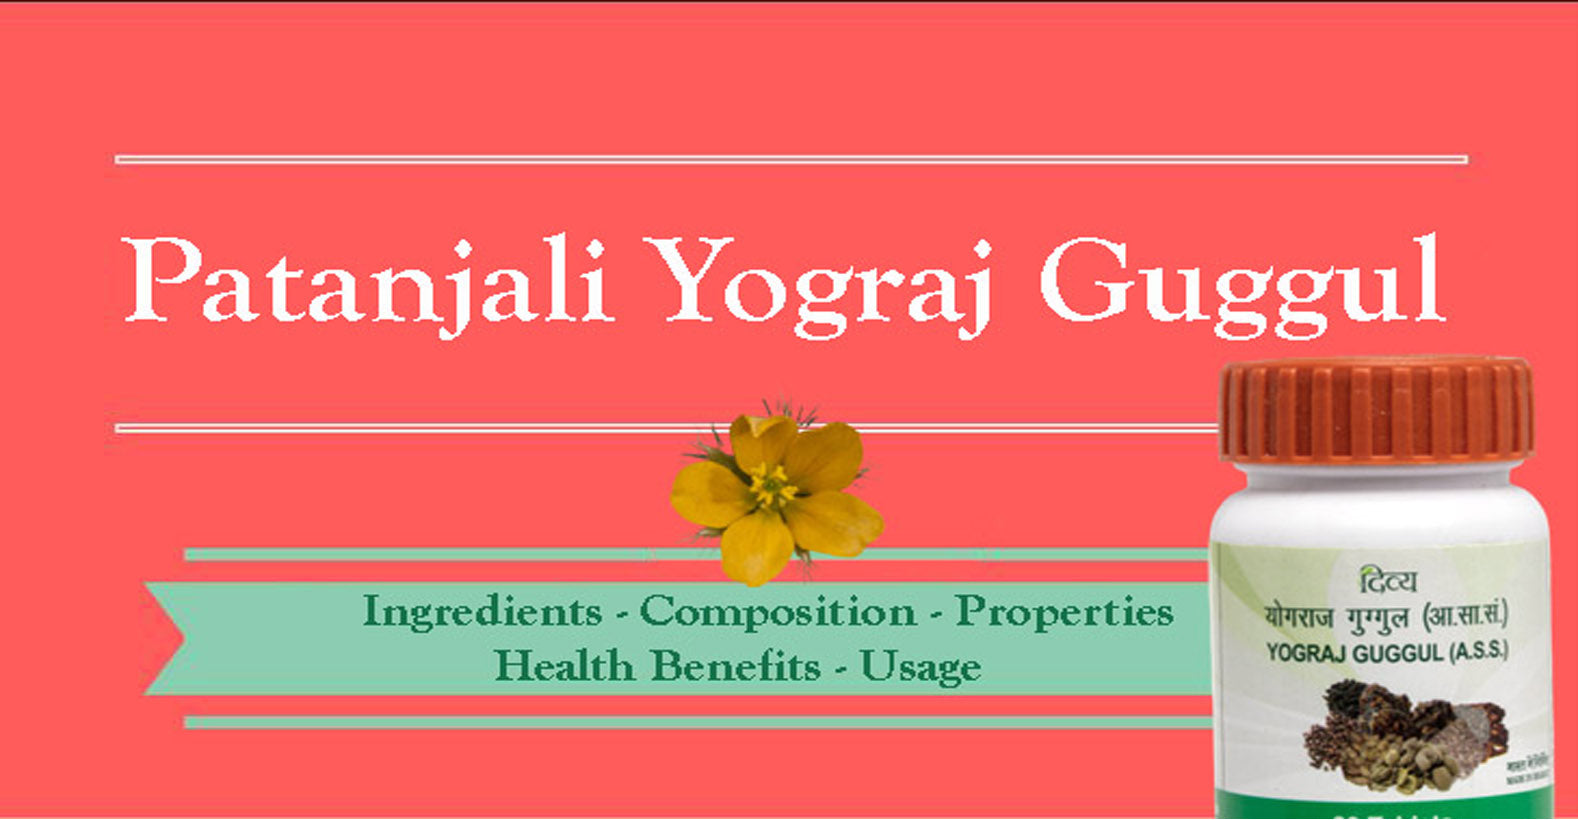 Patanjali Yograj Guggul - Ingredients, Composition, Properties, Health Benefits, Usage